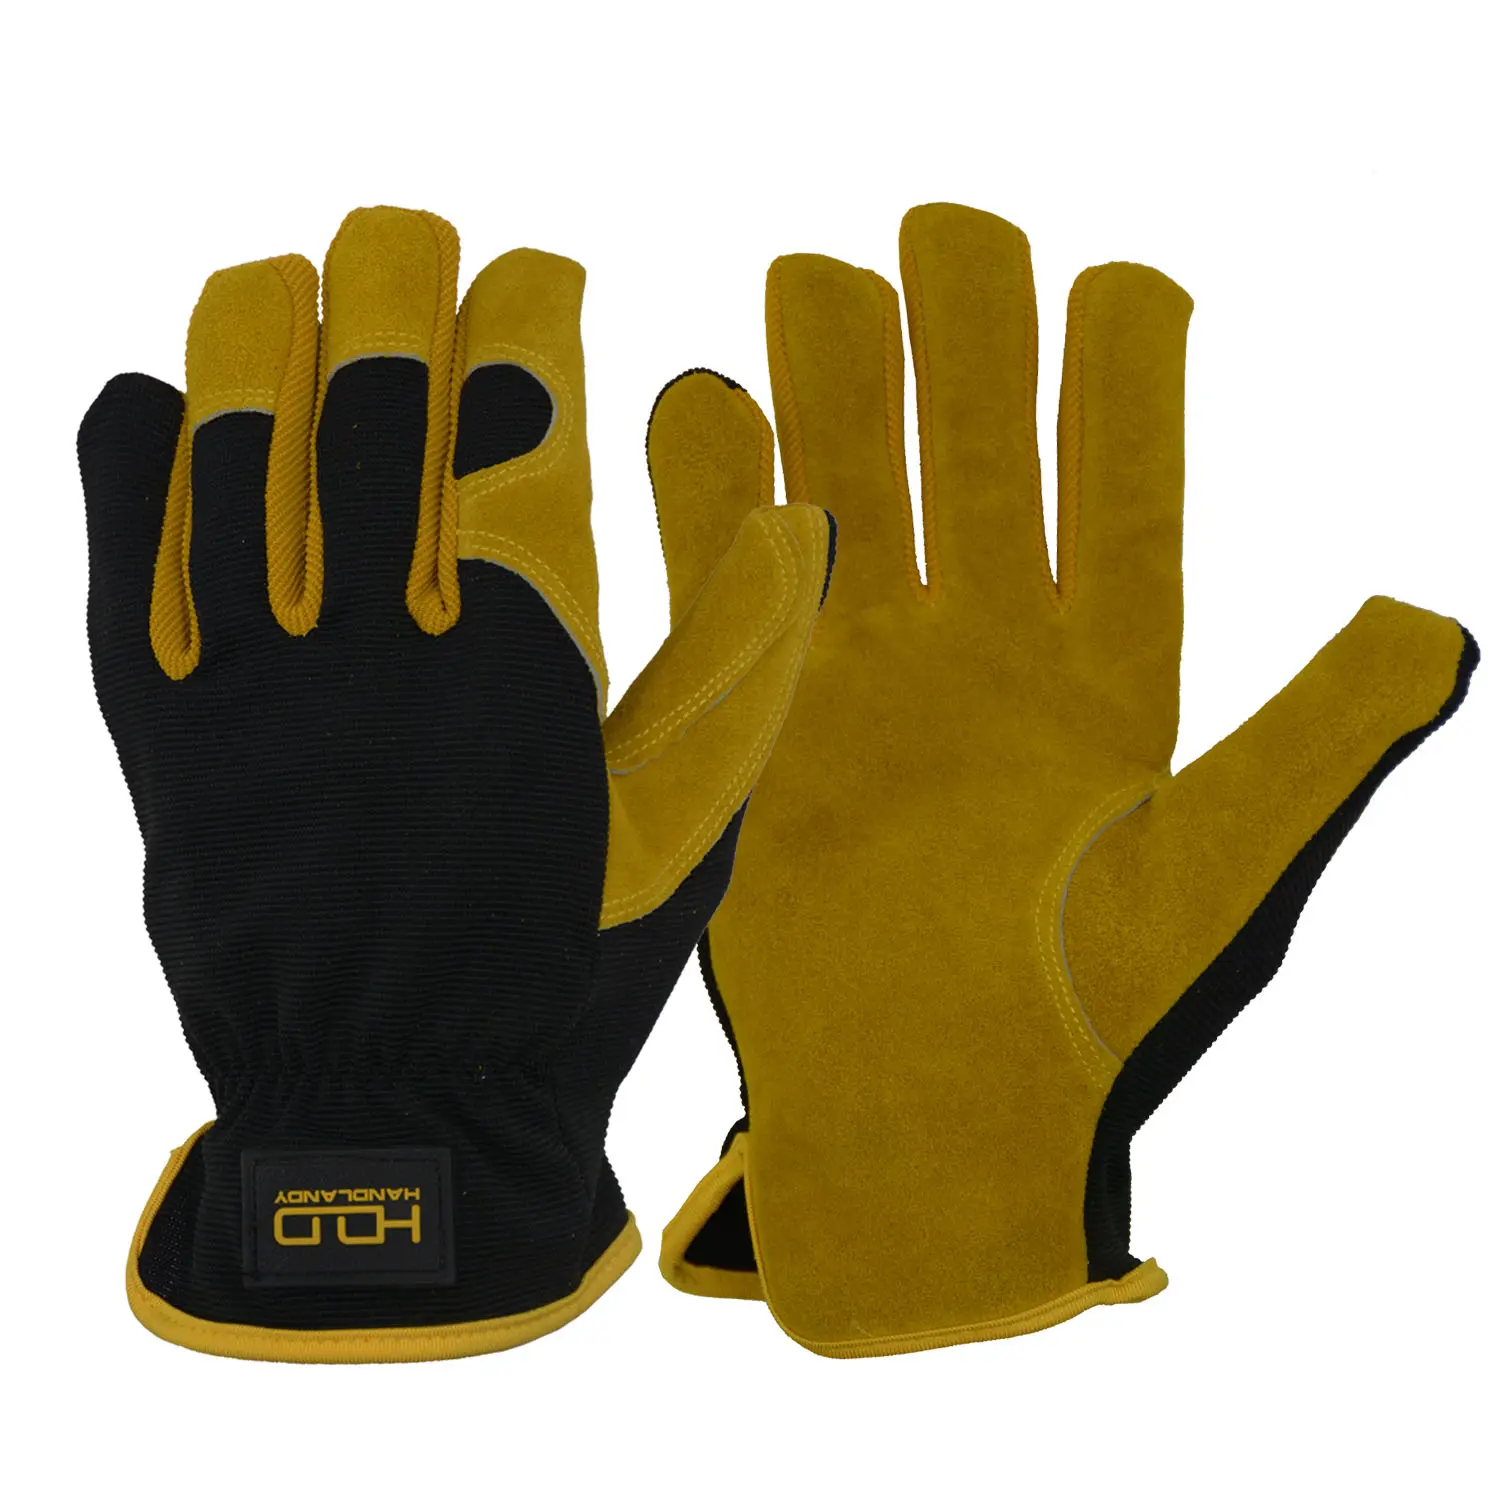 Drive Glove HANDLANDY Cowhide Leather Work Safety Hand Leather Driving Leather Working Gloves For Mens